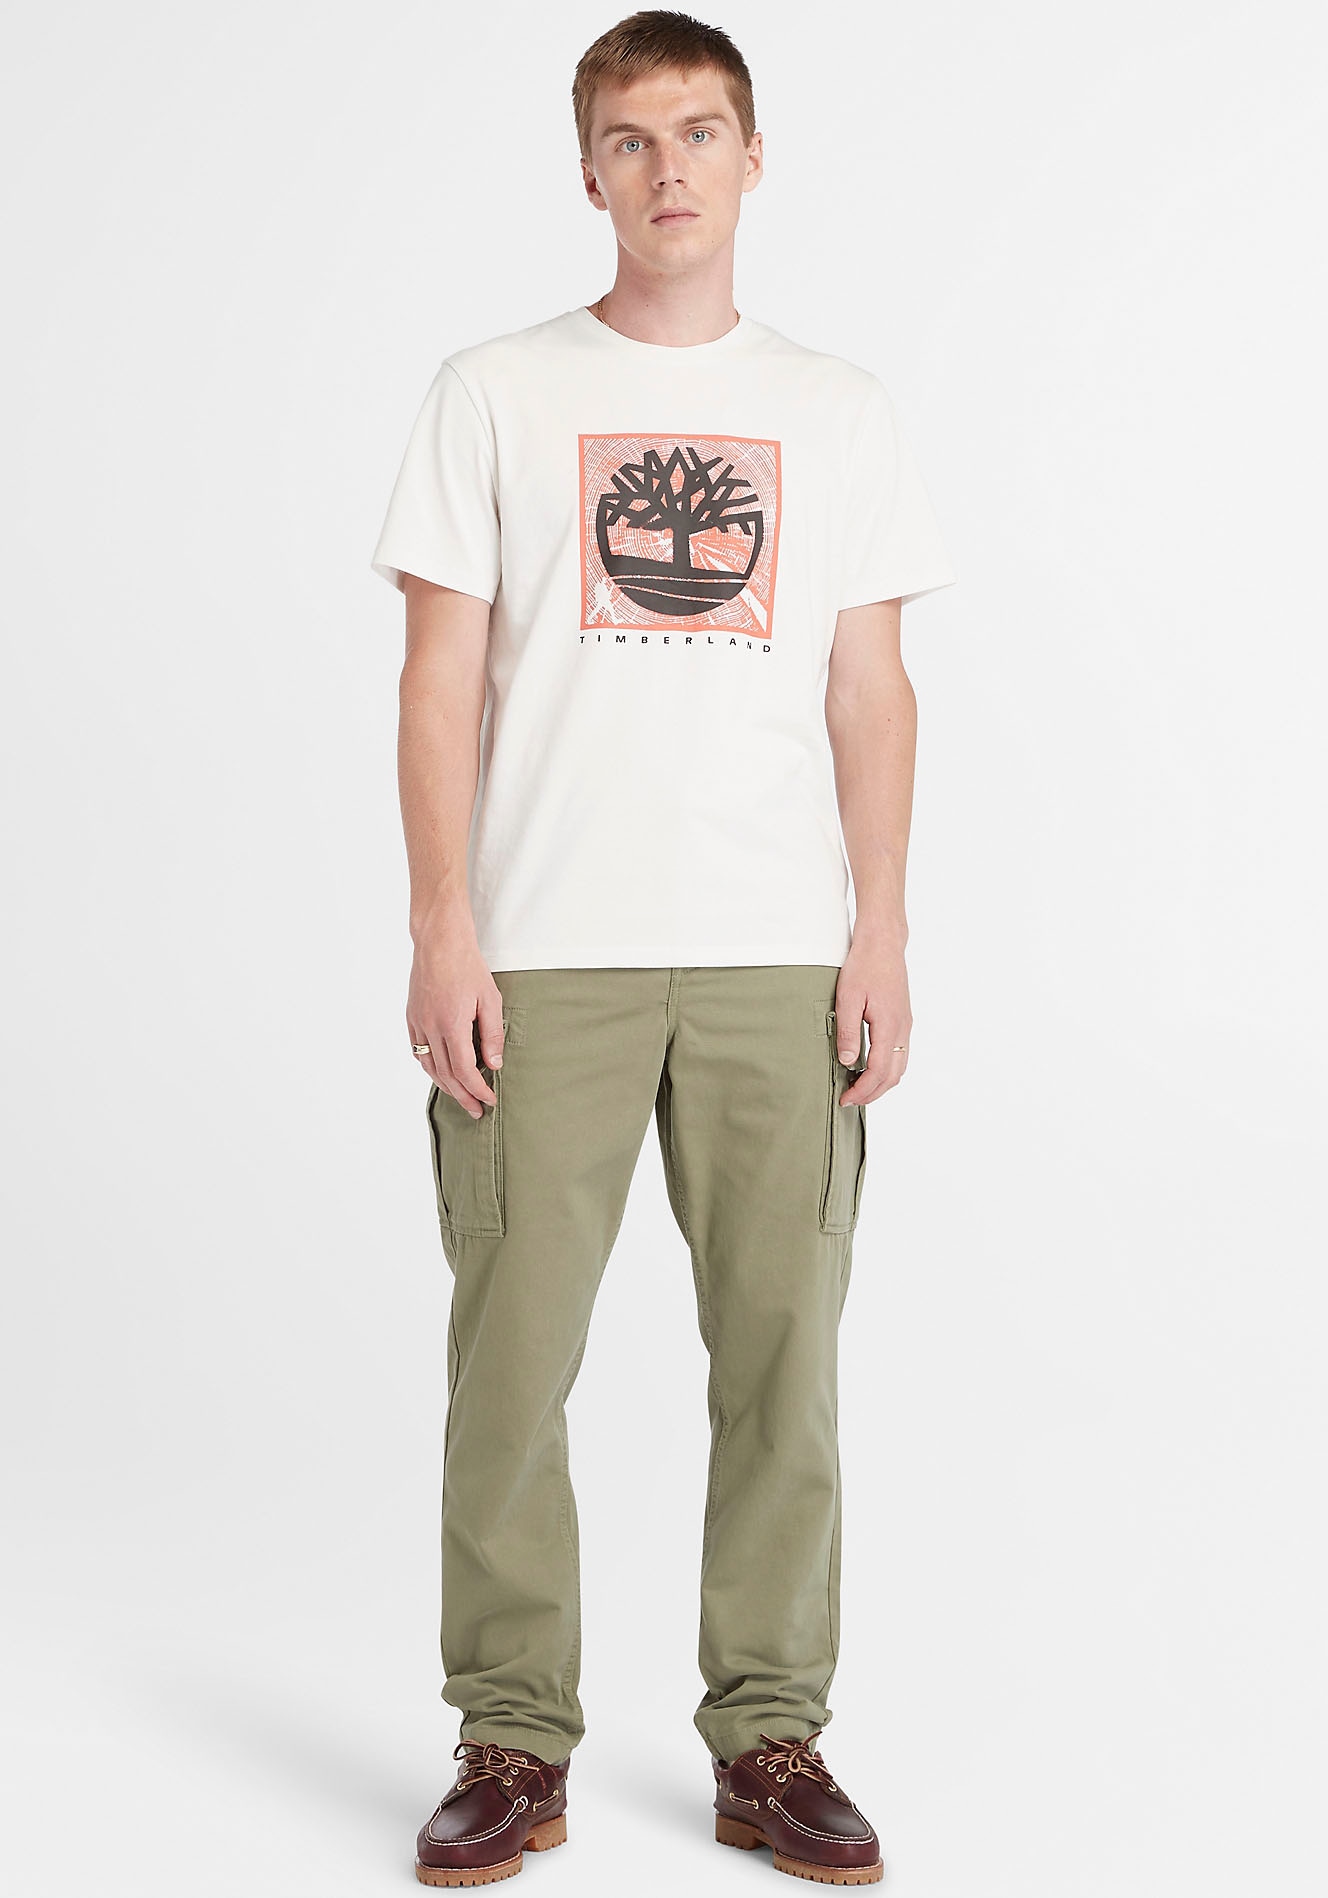 Timberland T-Shirt »Short Sleeve Front Graphic Tee«, in großen Größen